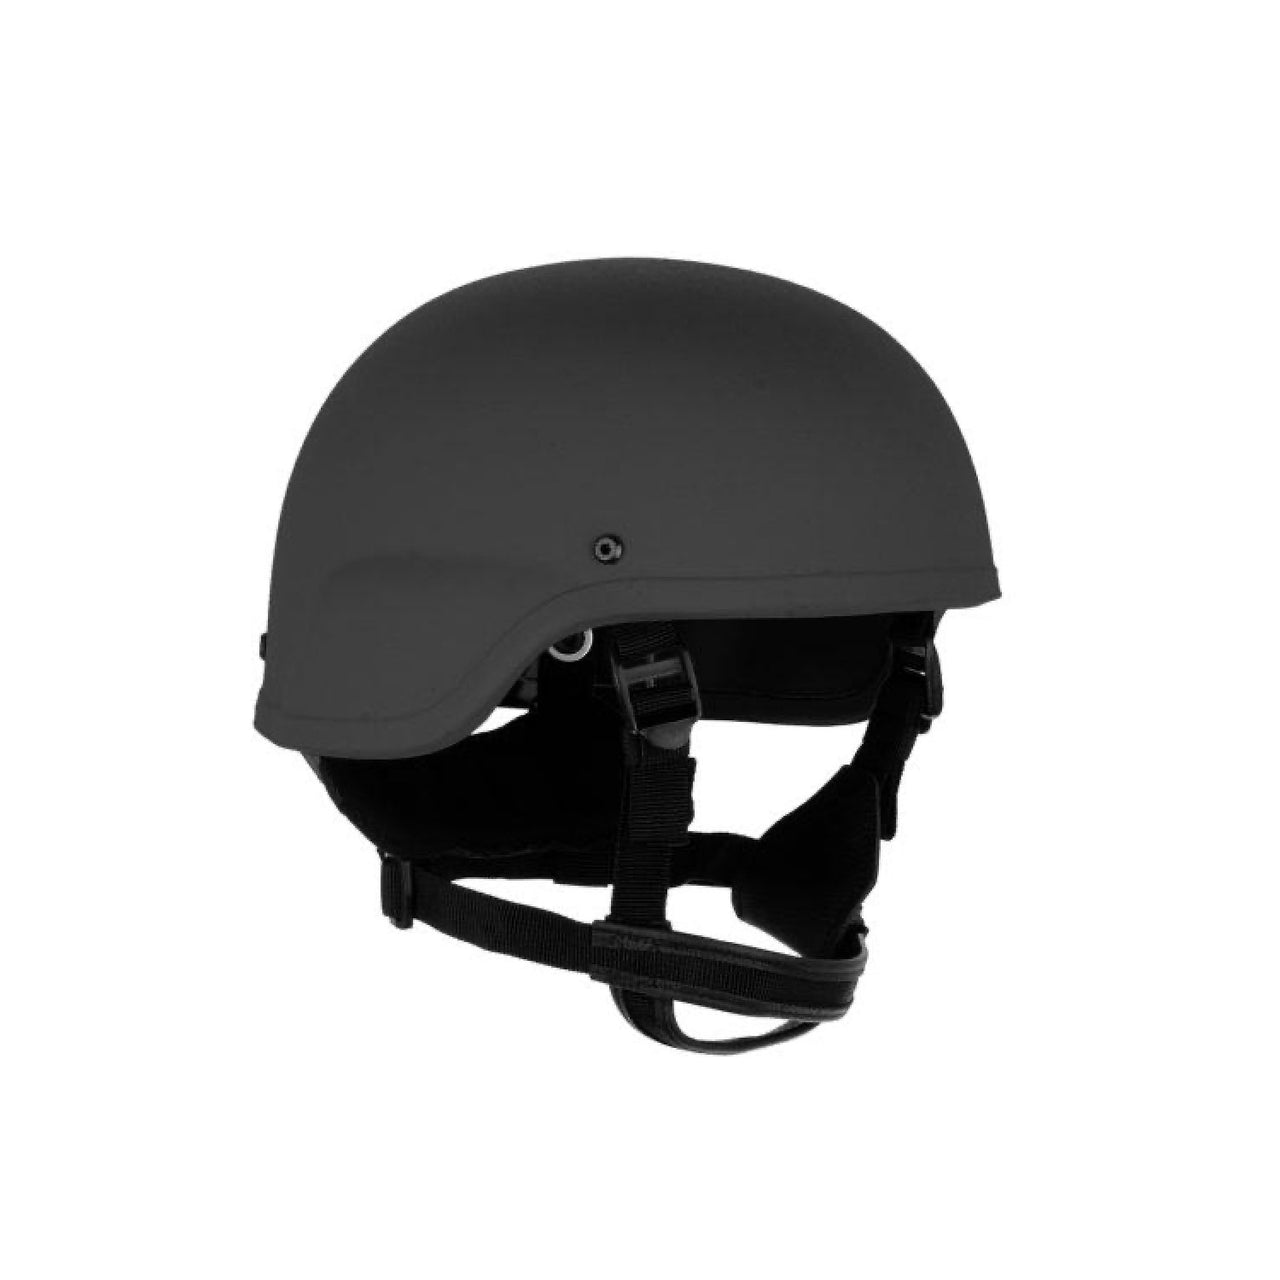 A Body Armor Direct Ballistic Helmet Level IIIA on a white background.